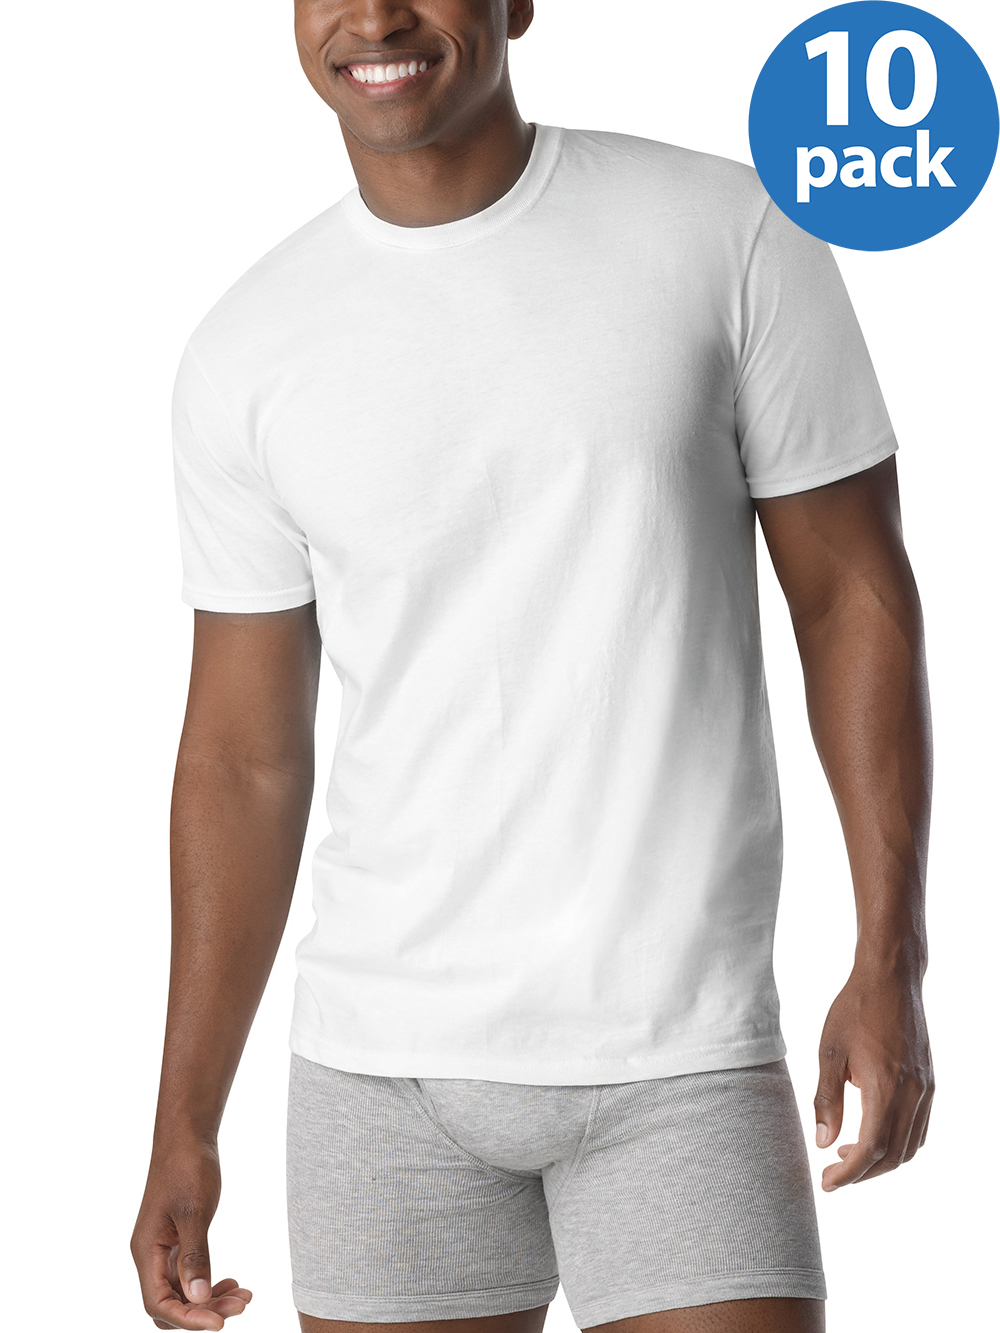 Hanes - Hanes Men's ComfortSoft White Crew Neck T-Shirt 10 Pack